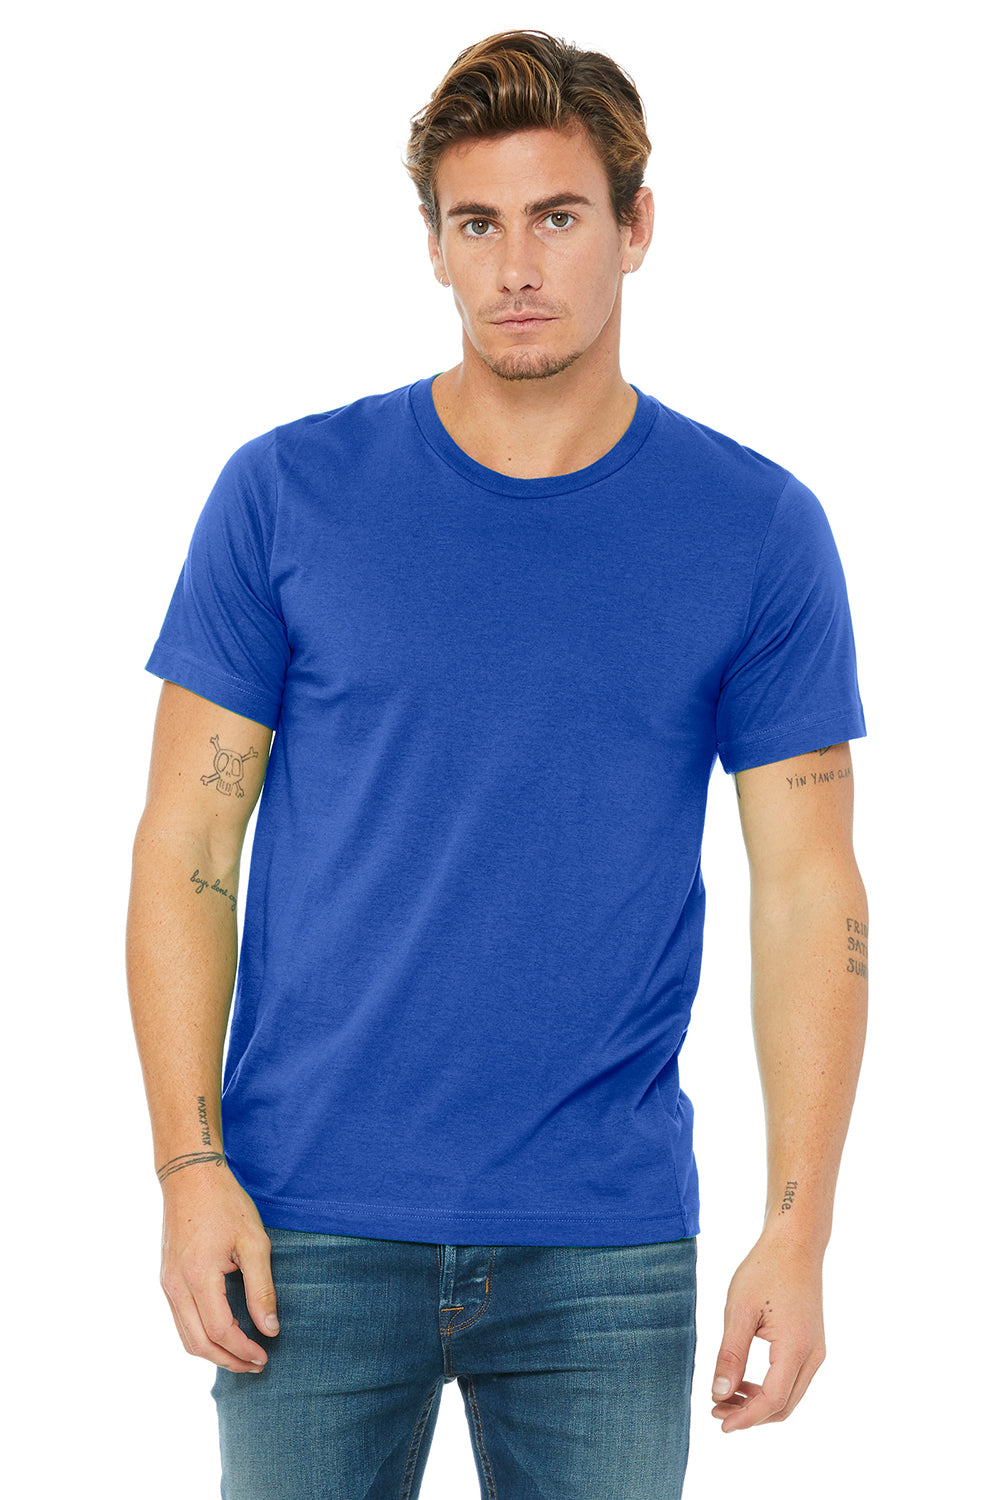 Bella + Canvas 3650 Mens Short Sleeve Crewneck T-Shirt Royal Blue Front